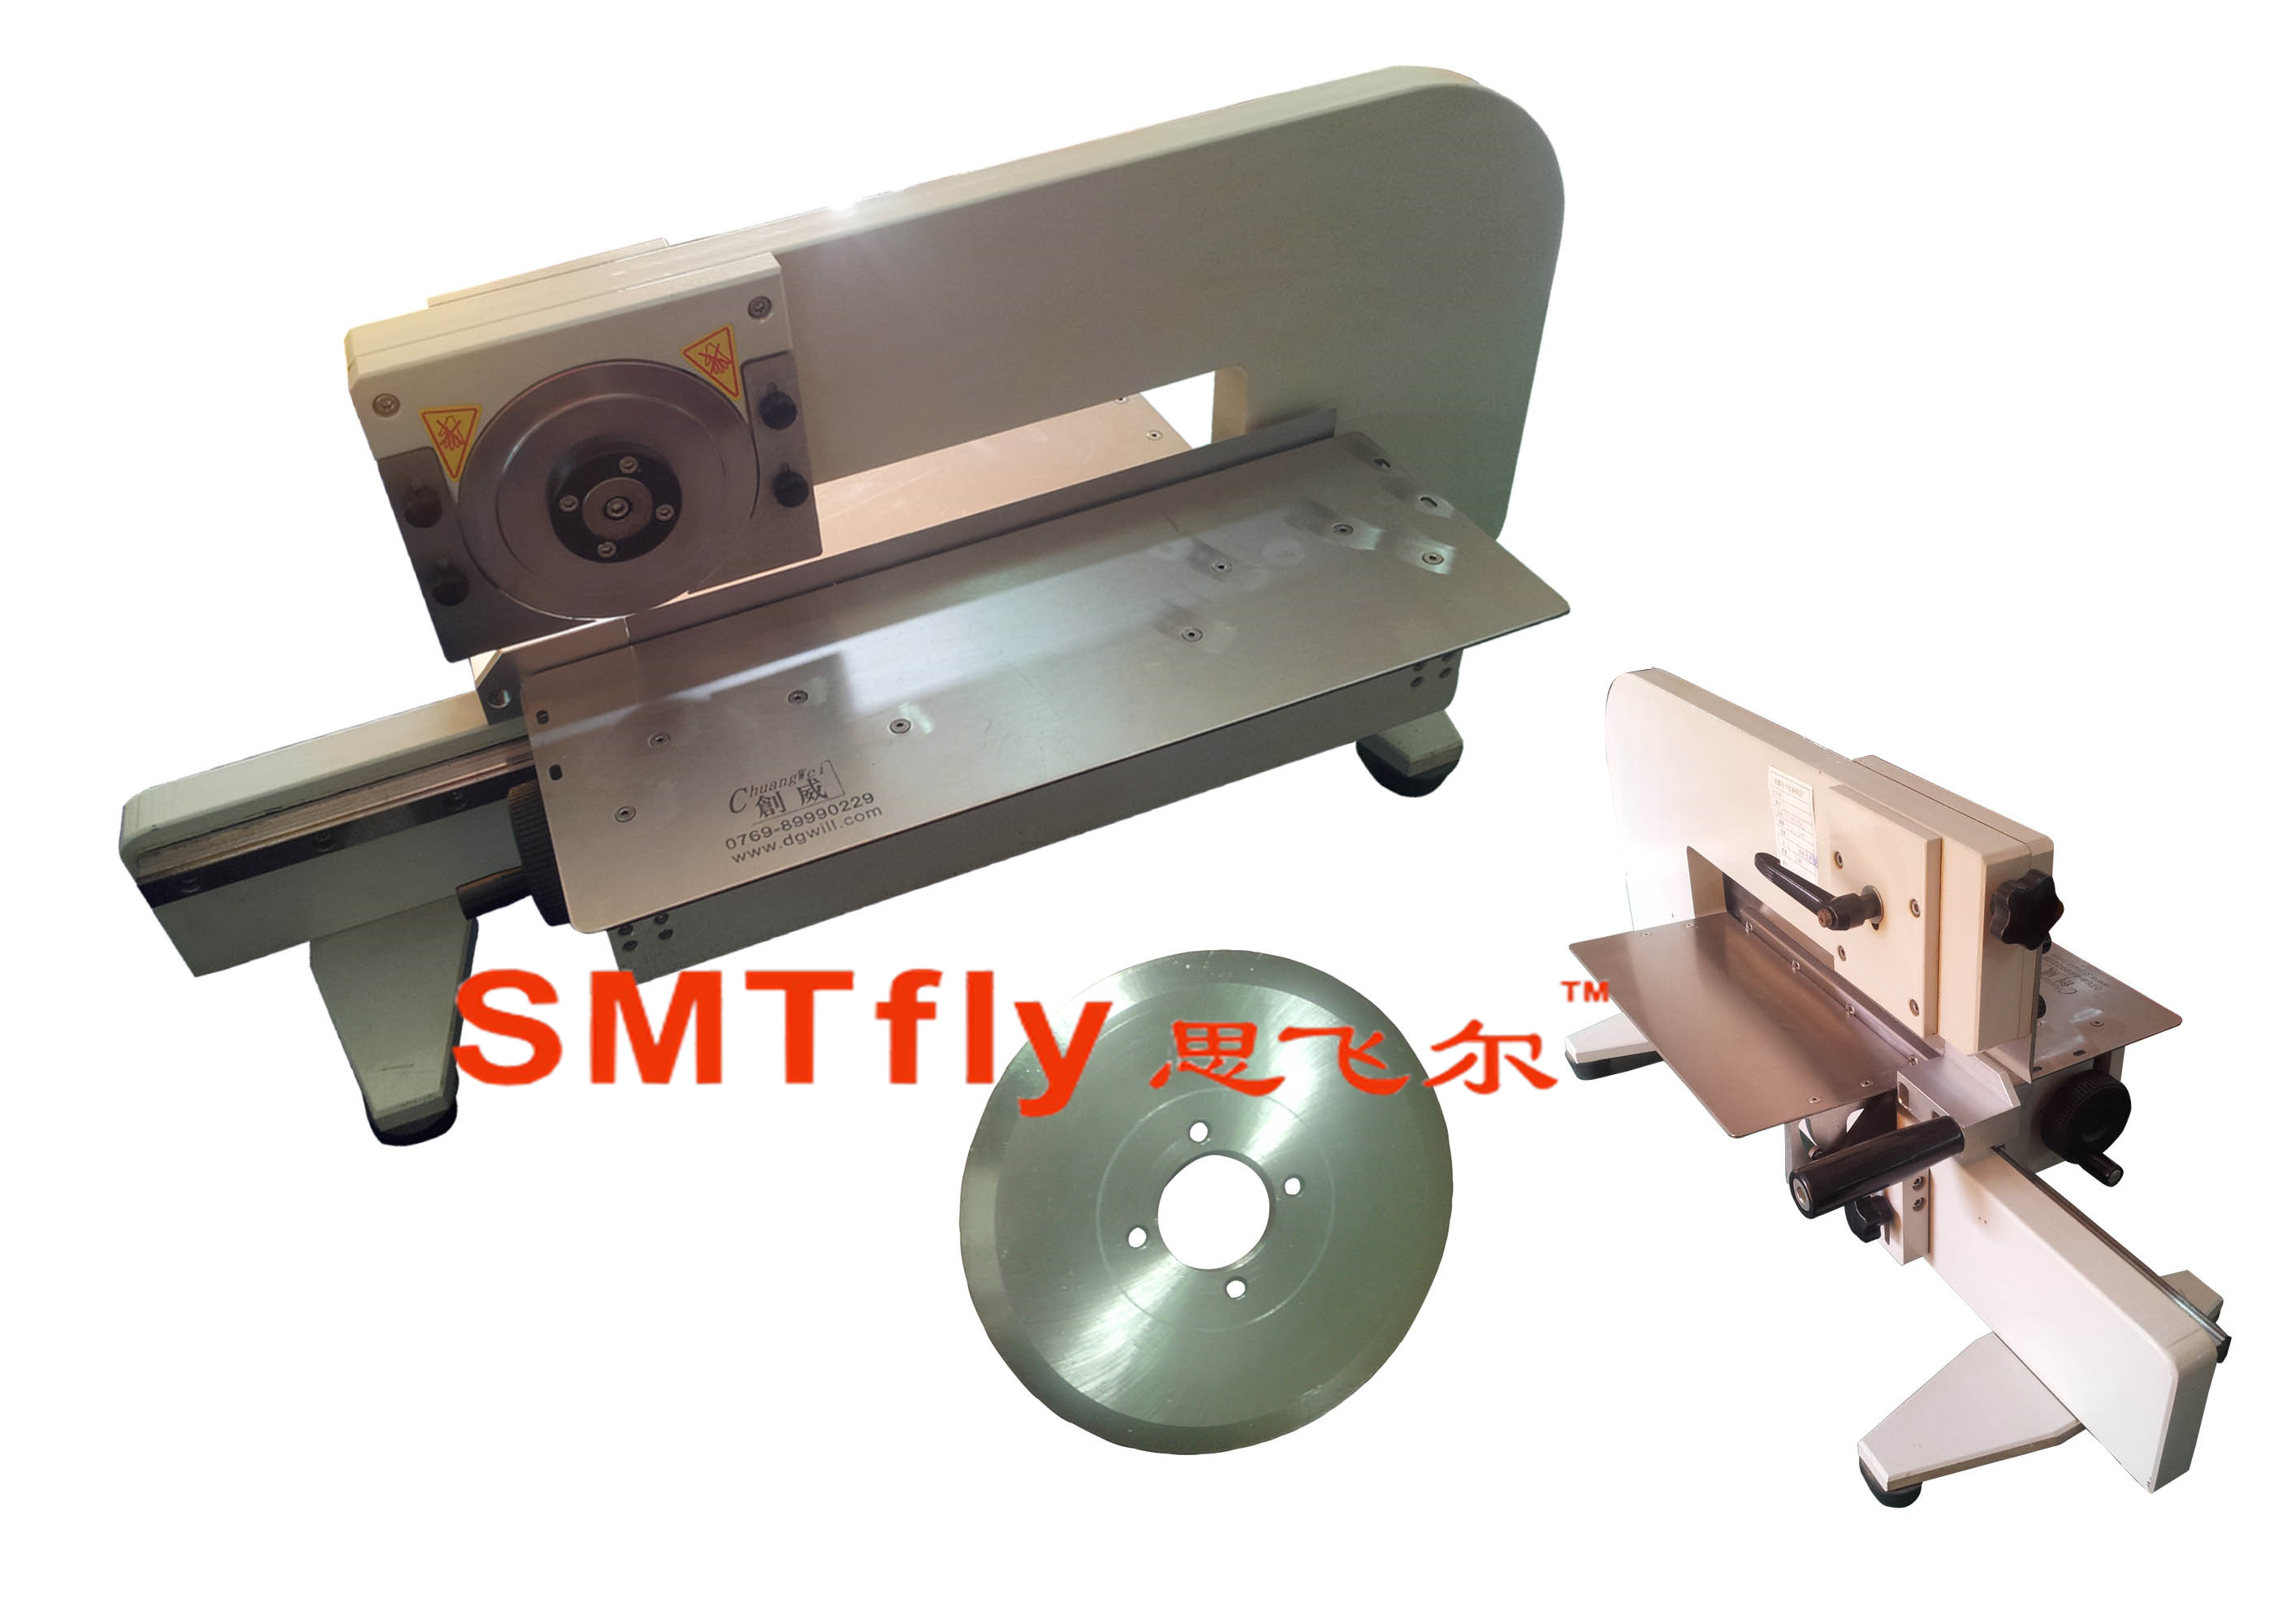 PCB Board Separating Machine,SMTfly-2M